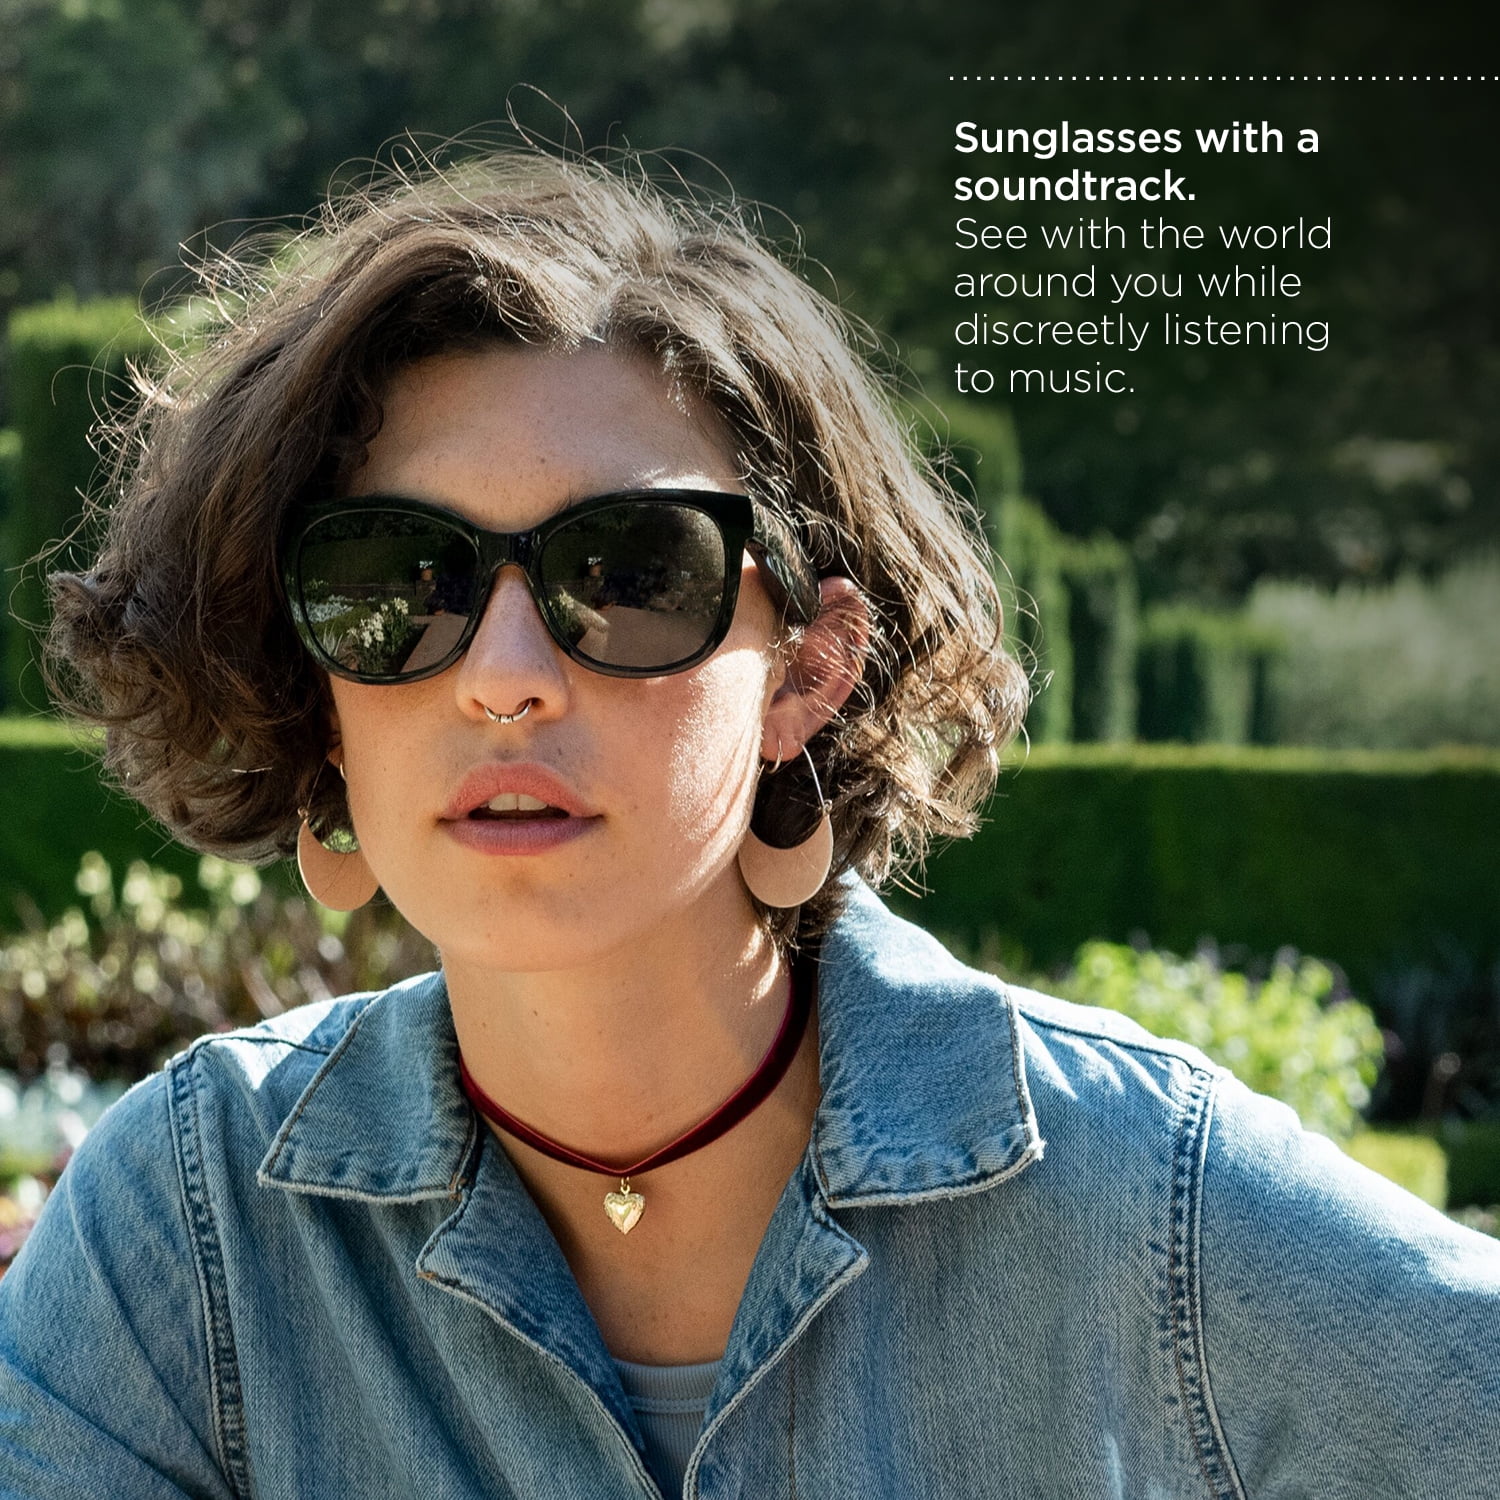 Bose Frames Soprano Cat Eye Audio Bluetooth Sunglasses, Black 